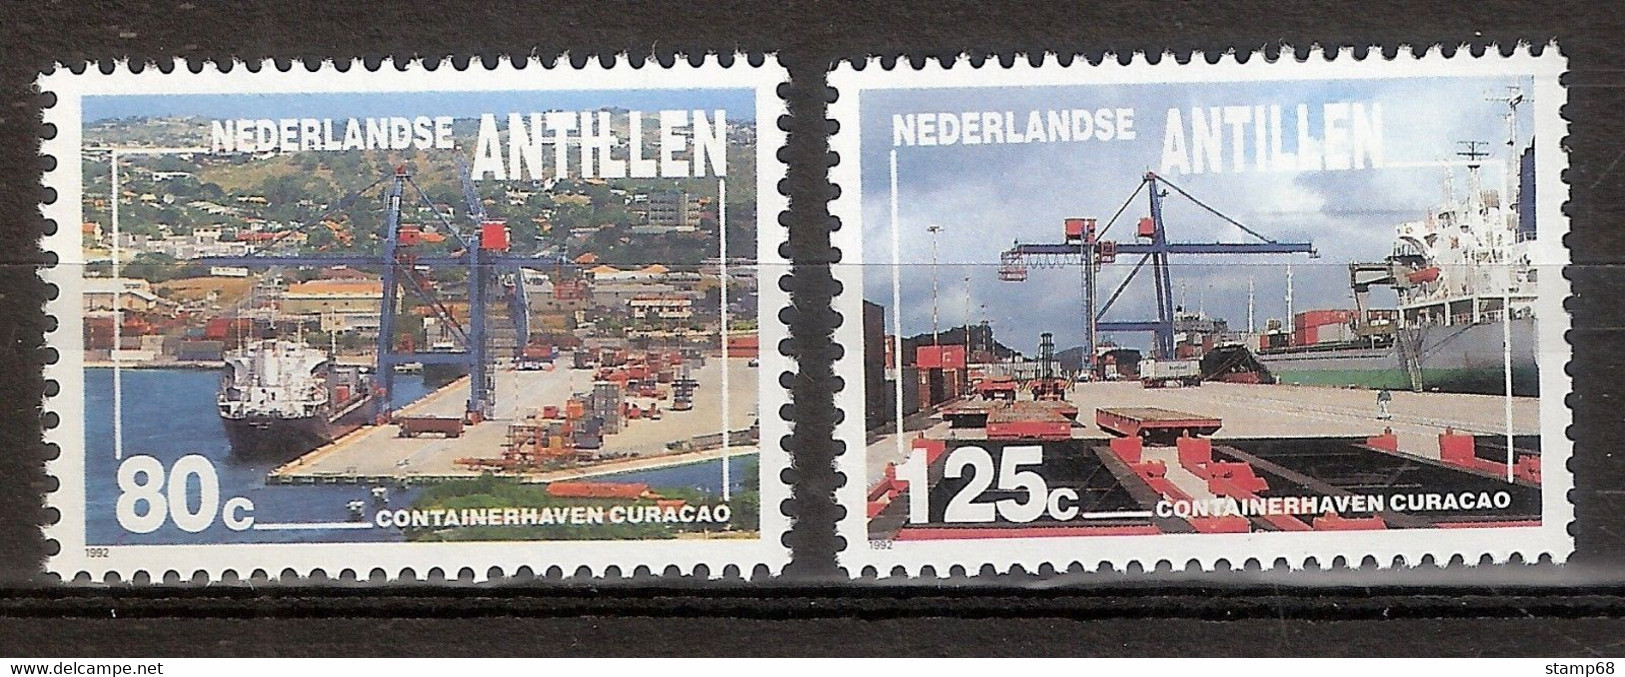 Nederlandse Antillen NVPH 1006-07 Containerhavens Curacao 1992 MNH Postfris - Curacao, Netherlands Antilles, Aruba